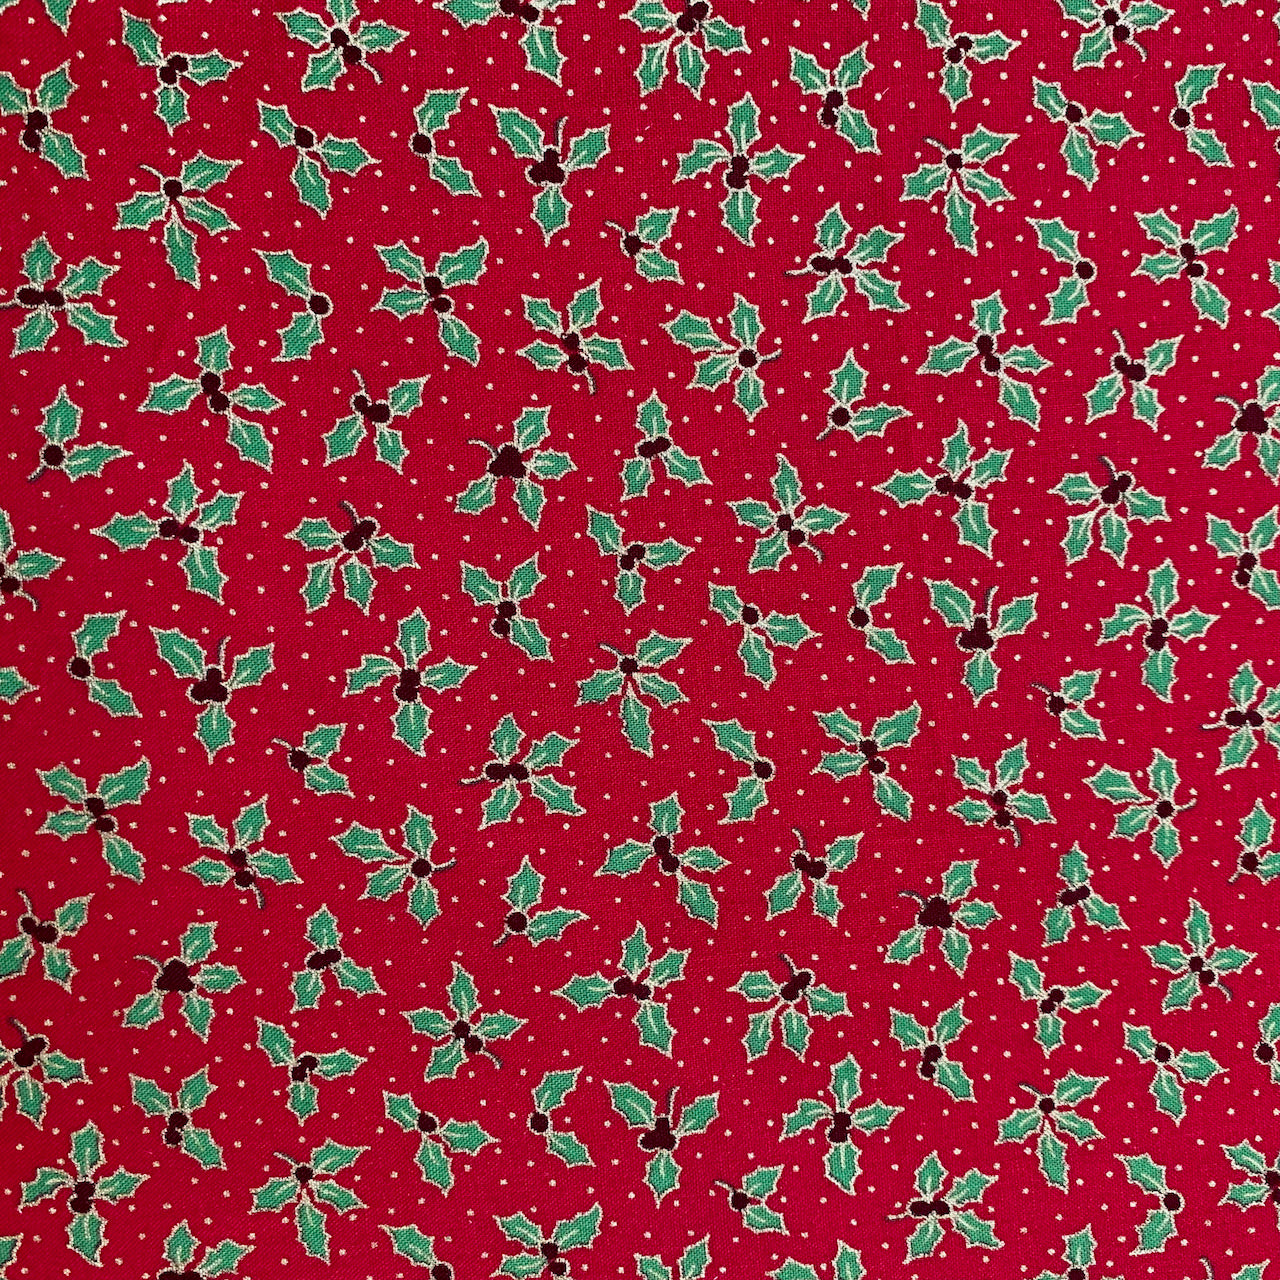 Fabric Felt - Holly on Red